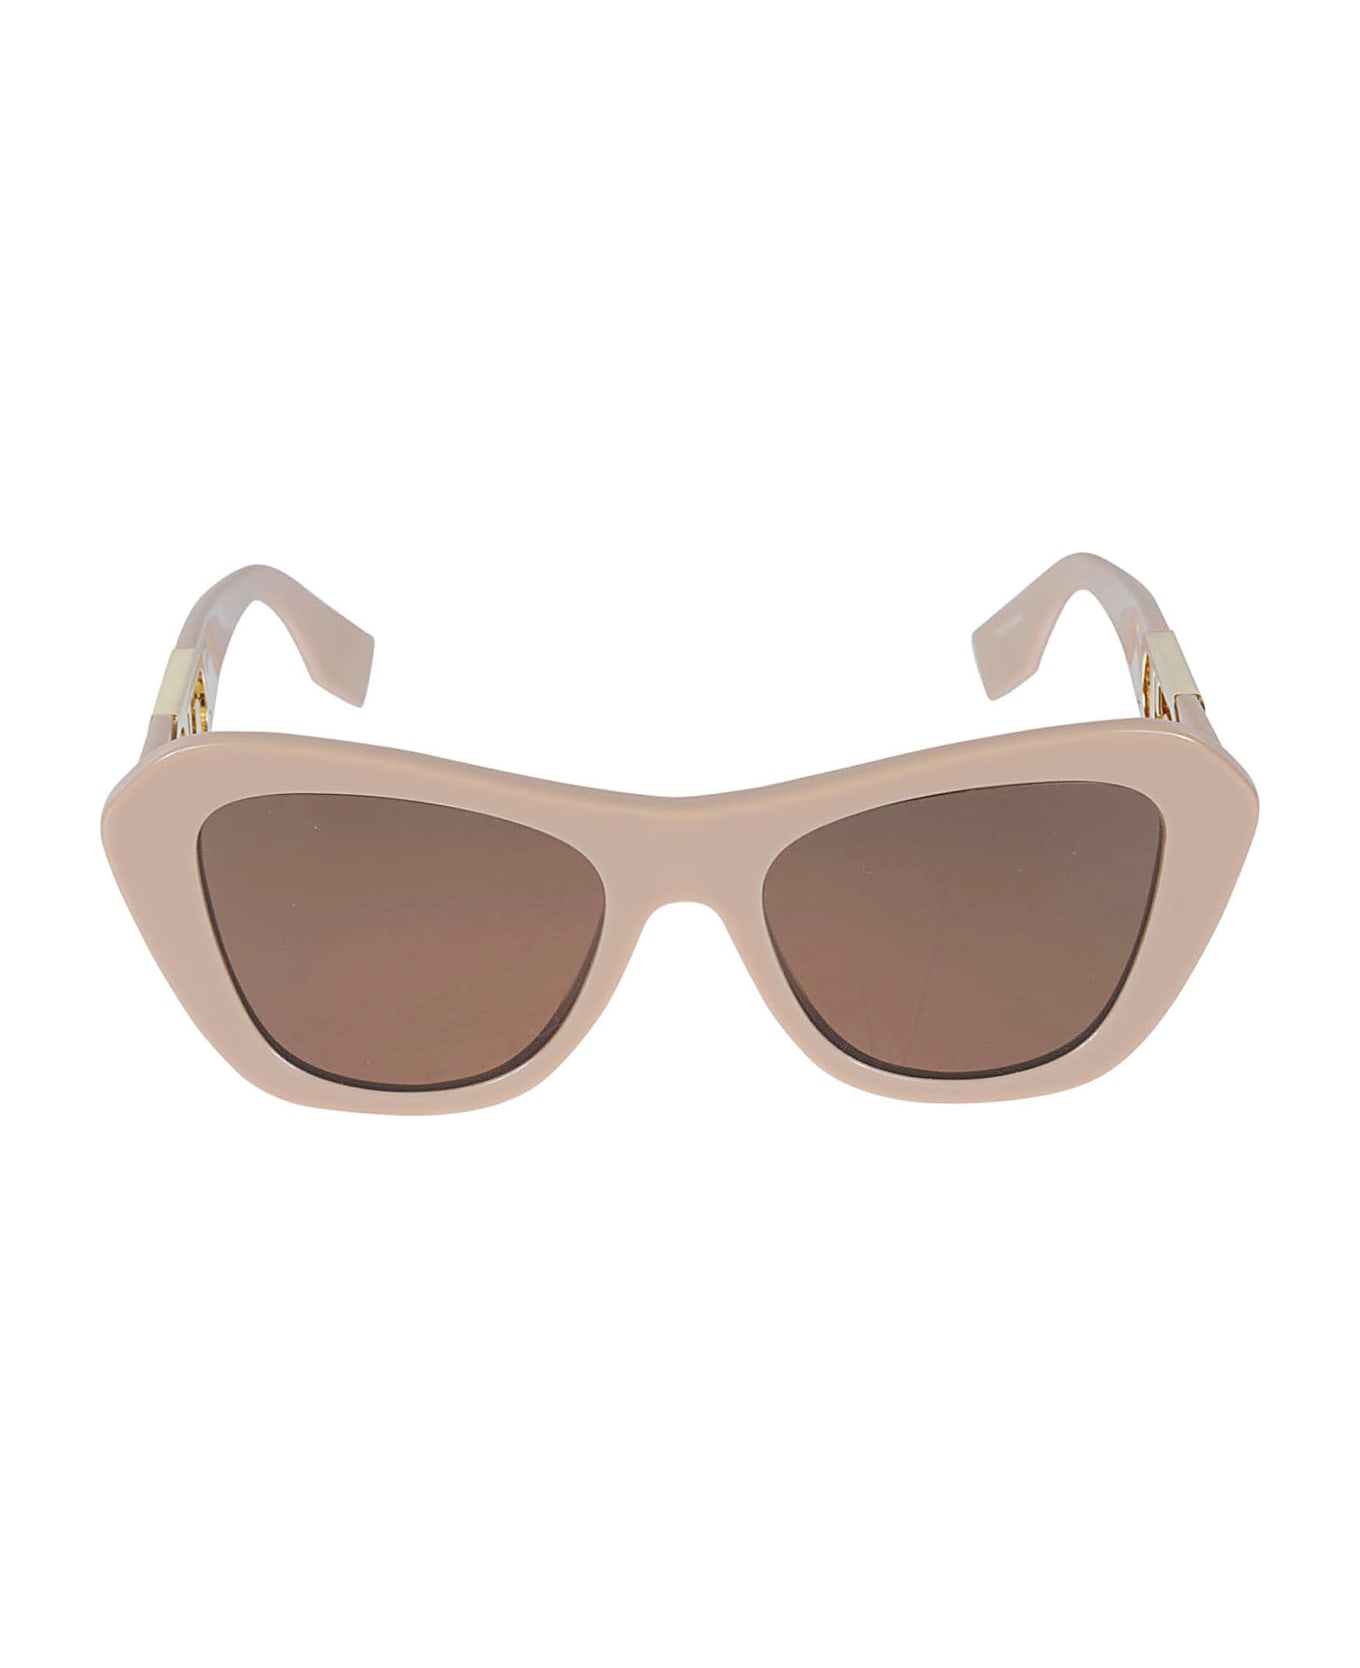 Fendi Eyewear Wayfarer Sunglasses - 57e サングラス